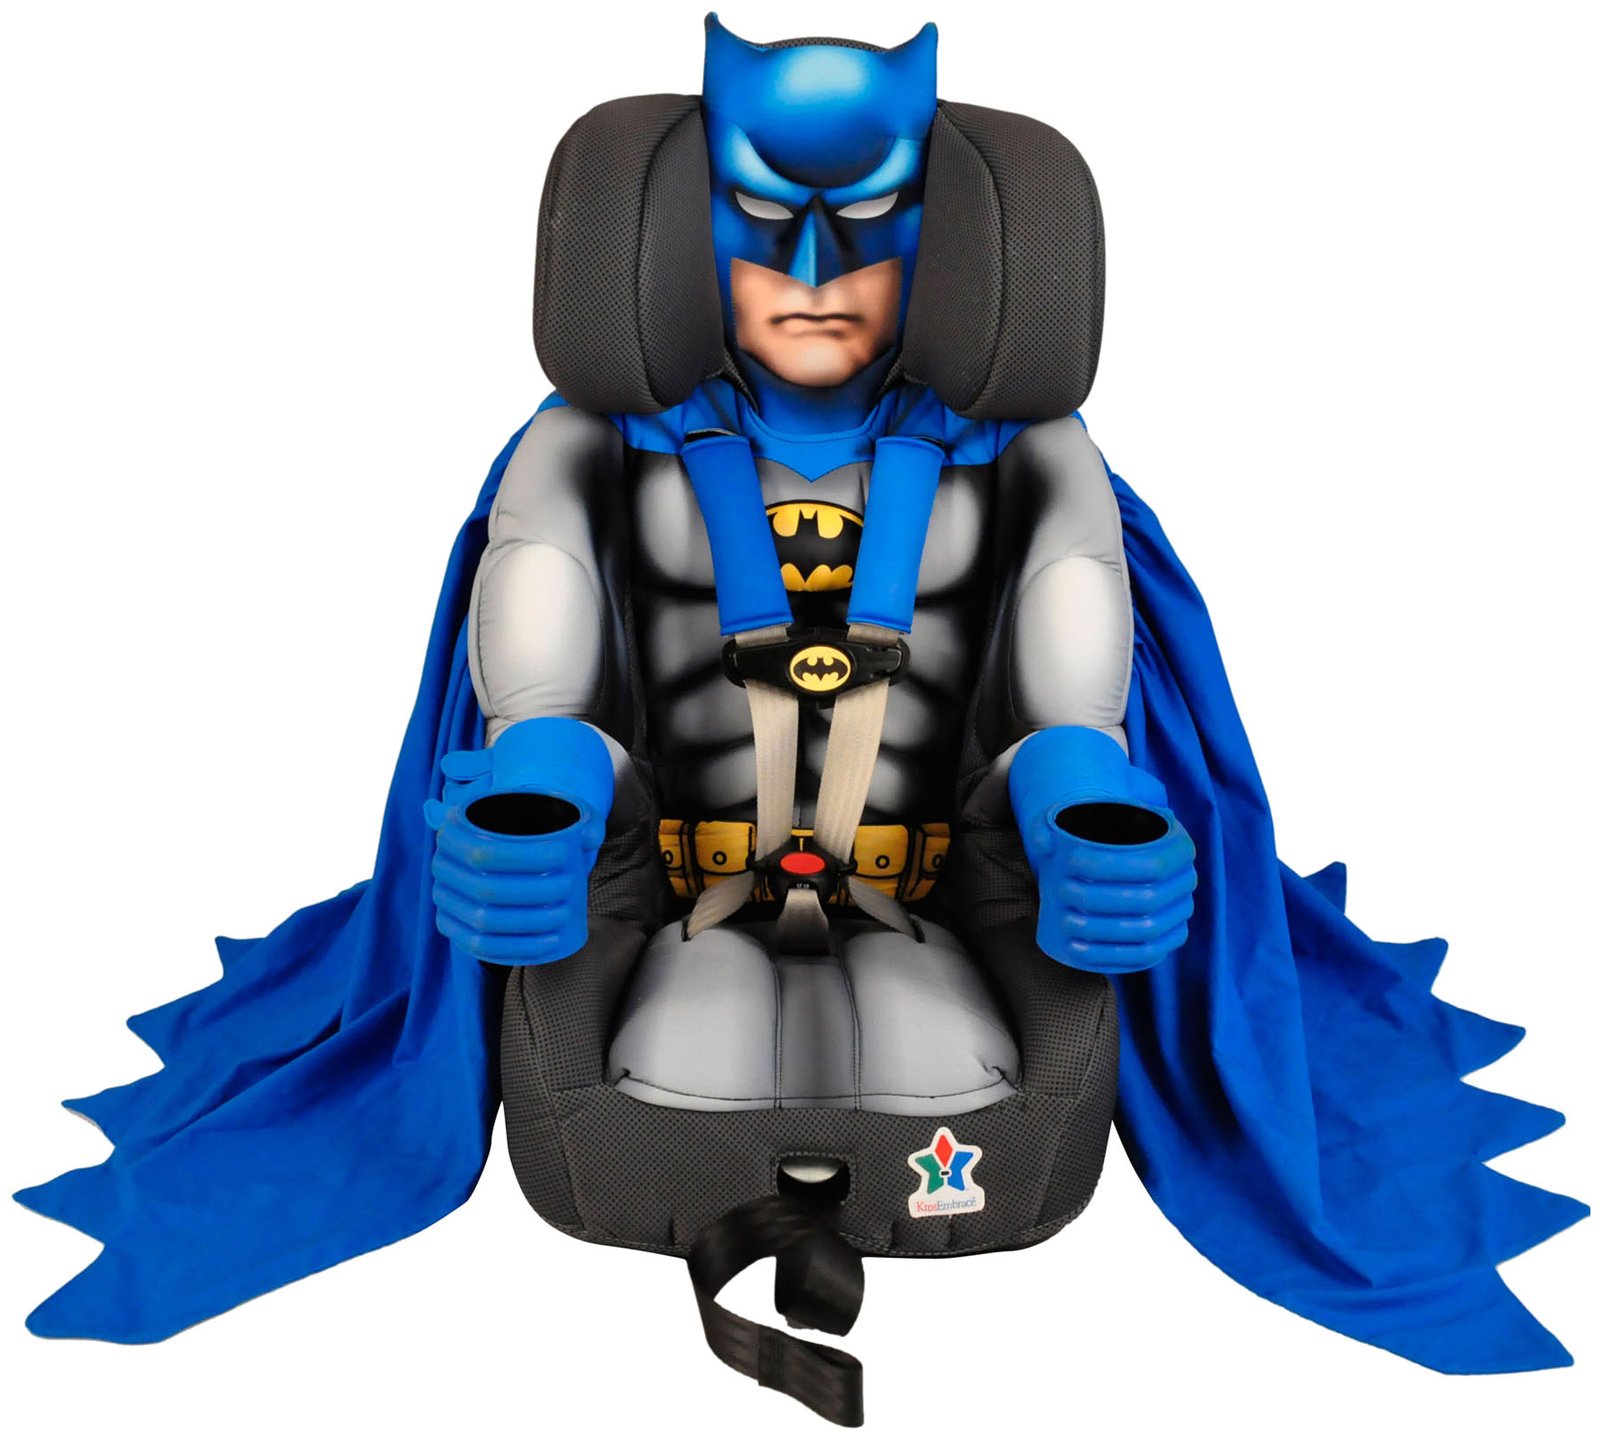 Kids Embrace Batman Car Seat Up To 12 Years Old, Fun And Stylish | eBay